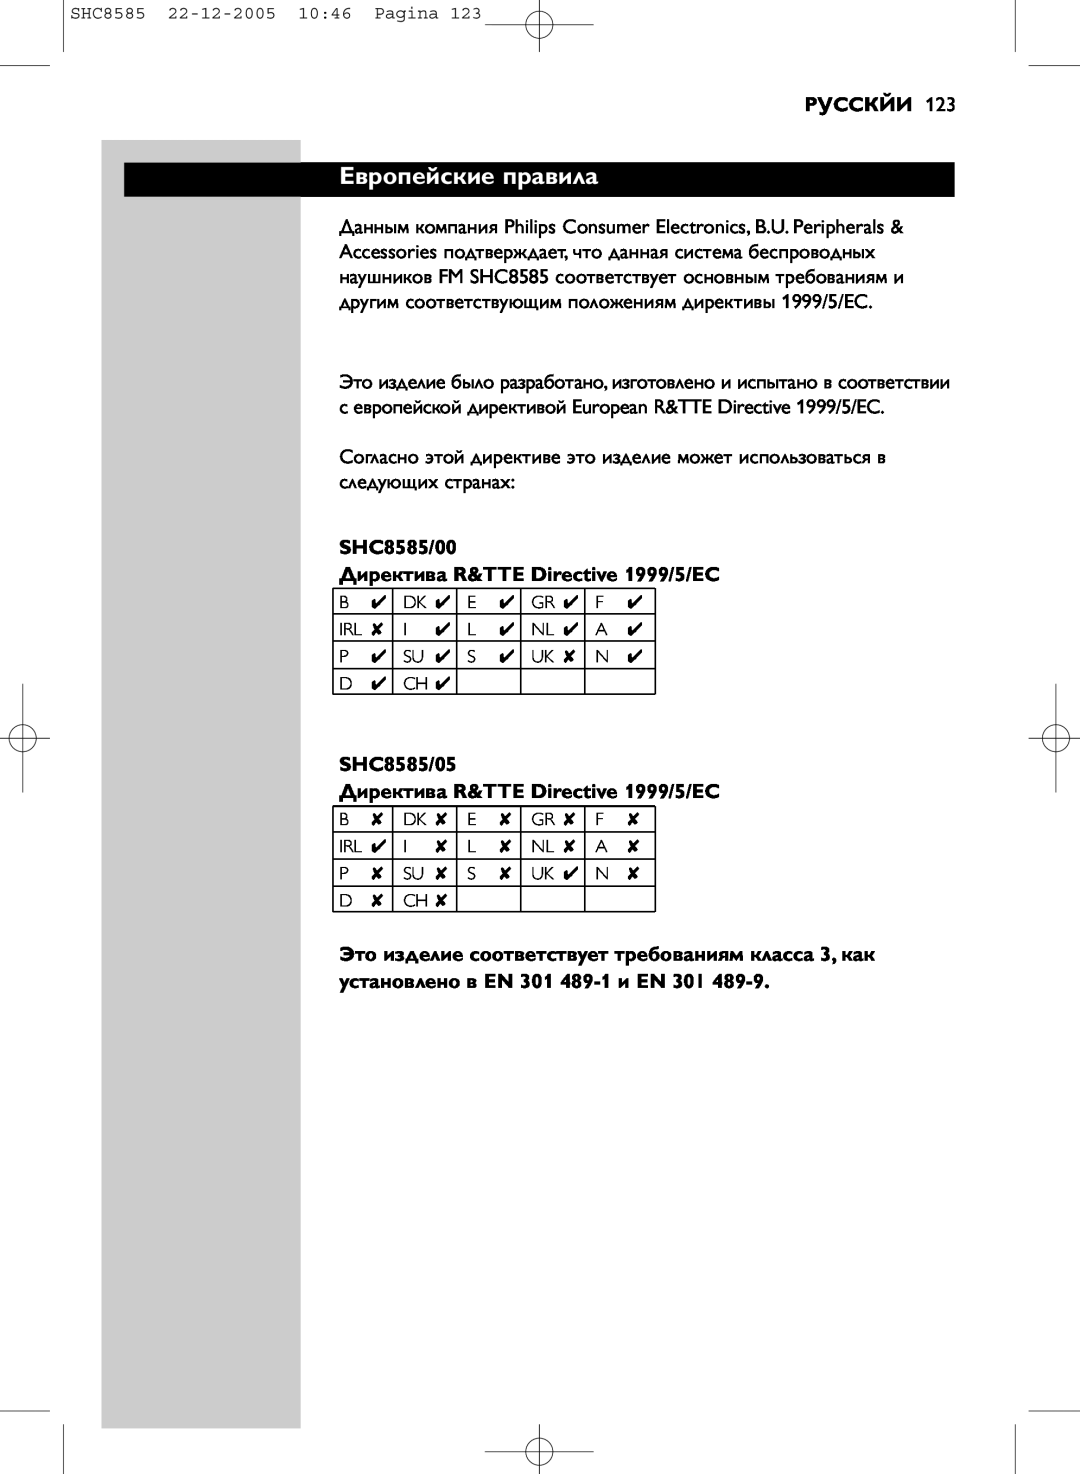 Philips SHC8585/05 manual Европейские правила, Русскйи, SHC8585/00 Директива R&TTE Directive 1999/5/EC 